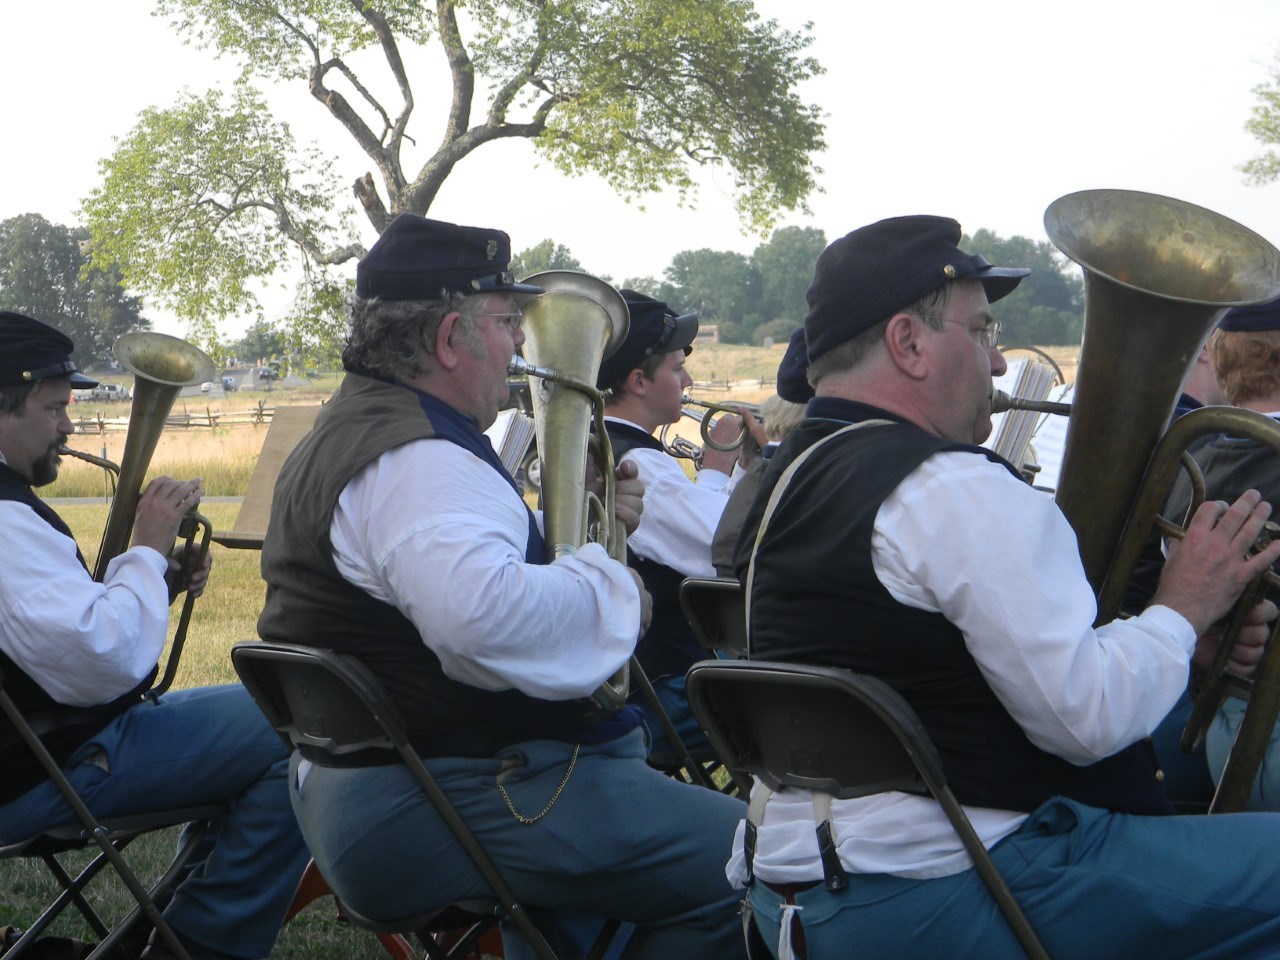 Musicians wearing Civil War soldier uniforms play brass instruments